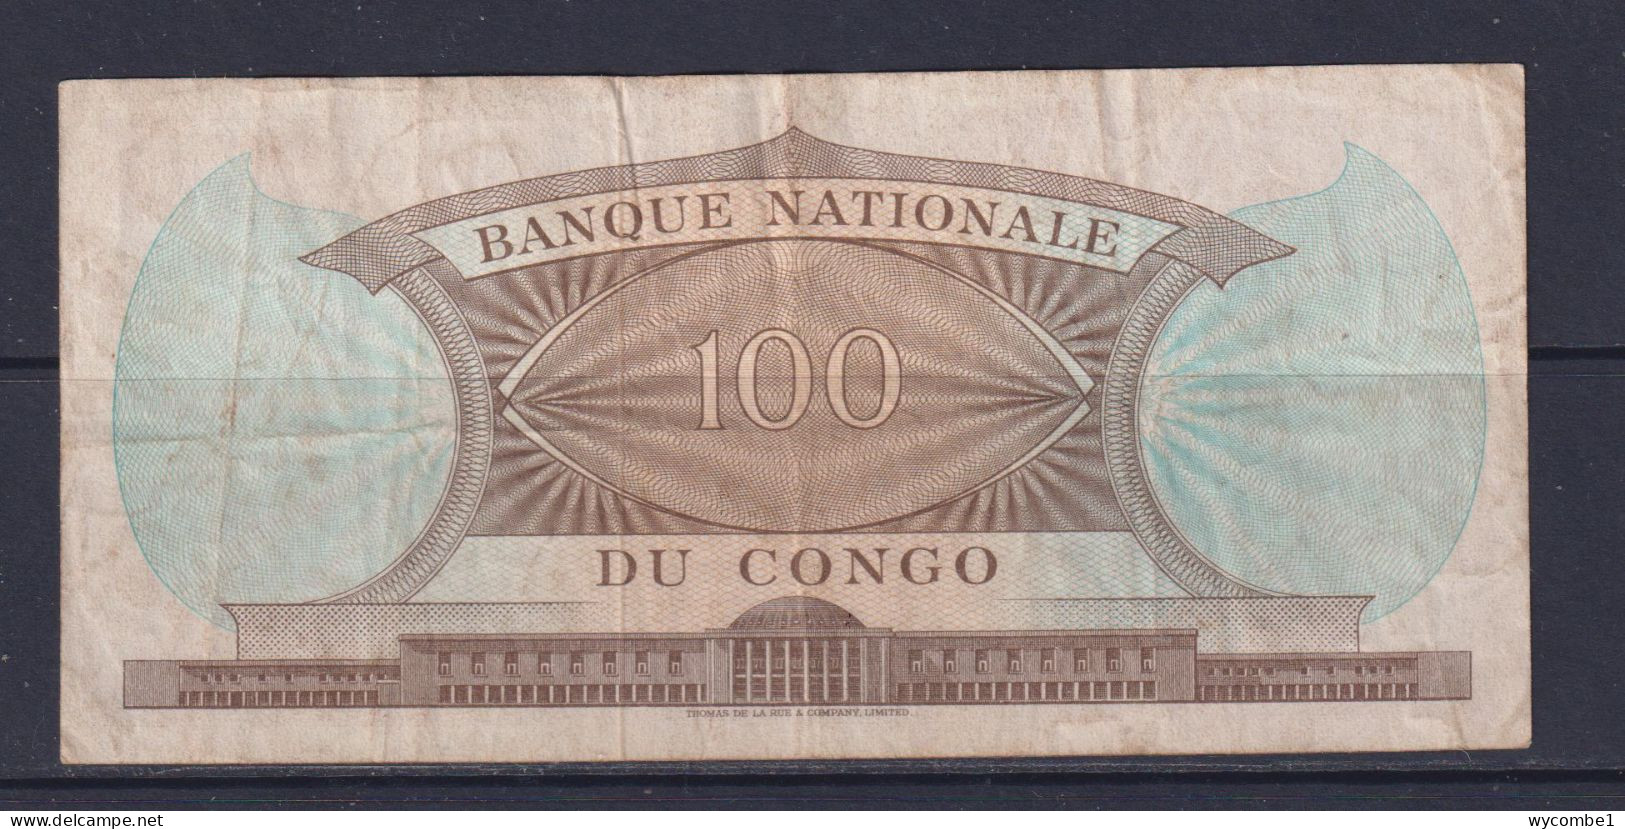 CONGO DR - 1962 100 Francs Circulated Banknote - Demokratische Republik Kongo & Zaire